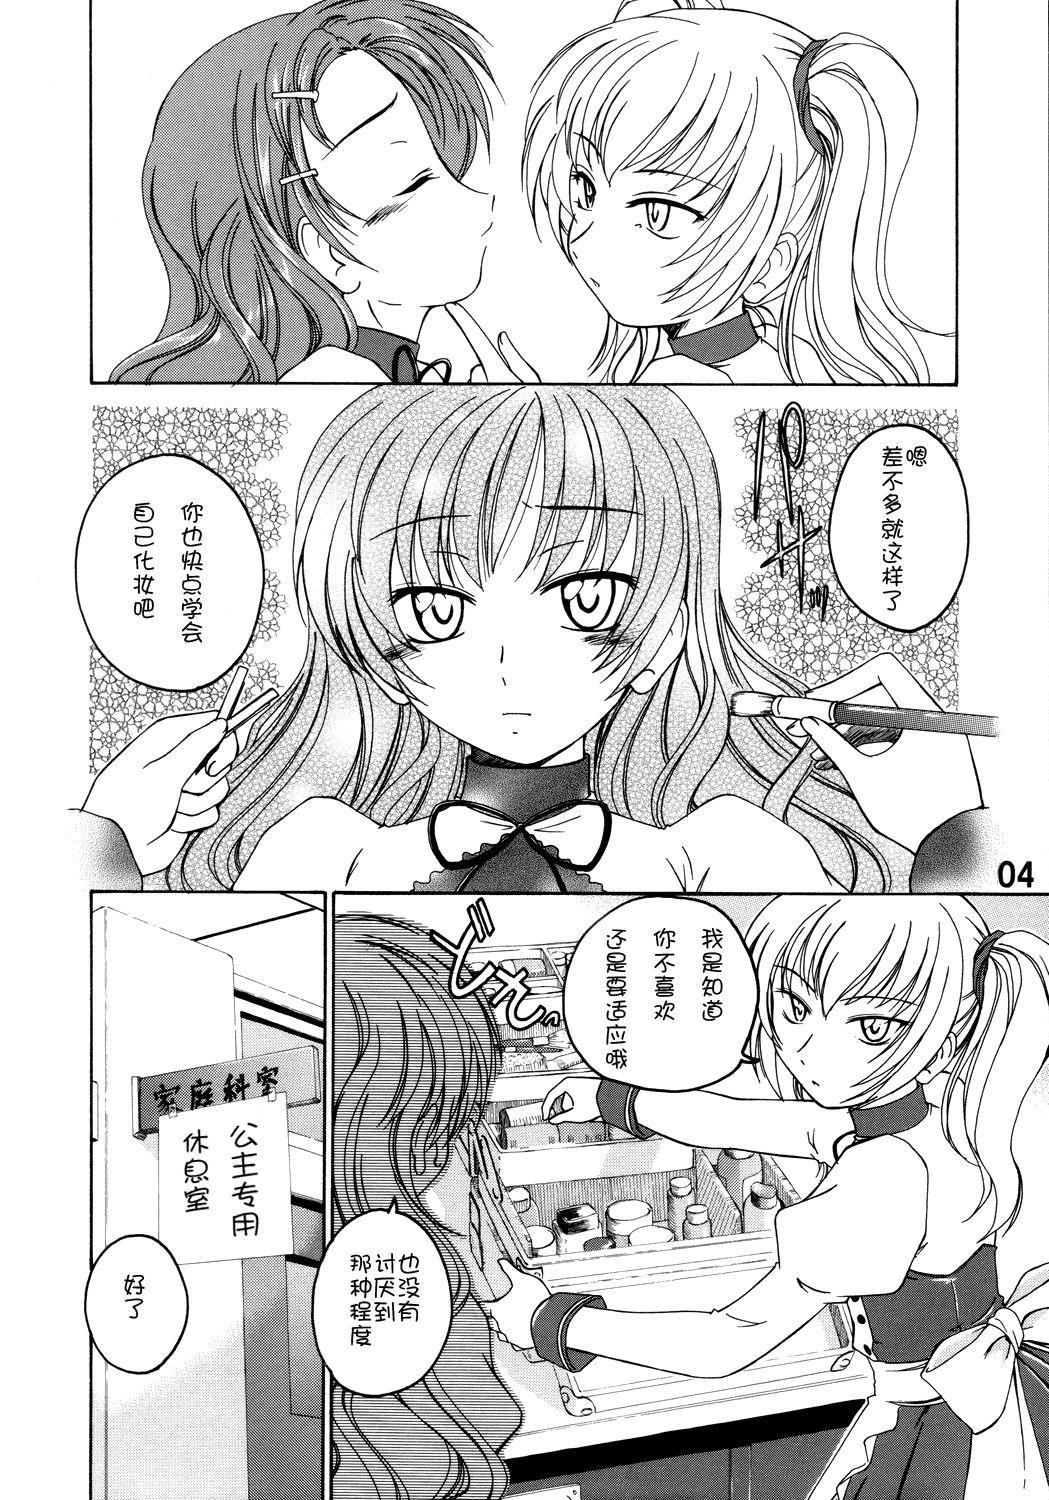 Bondage Manga Sangyou Haikibutsu 11 - Comic Industrial Wastes 11 - Princess princess Eating Pussy - Page 3